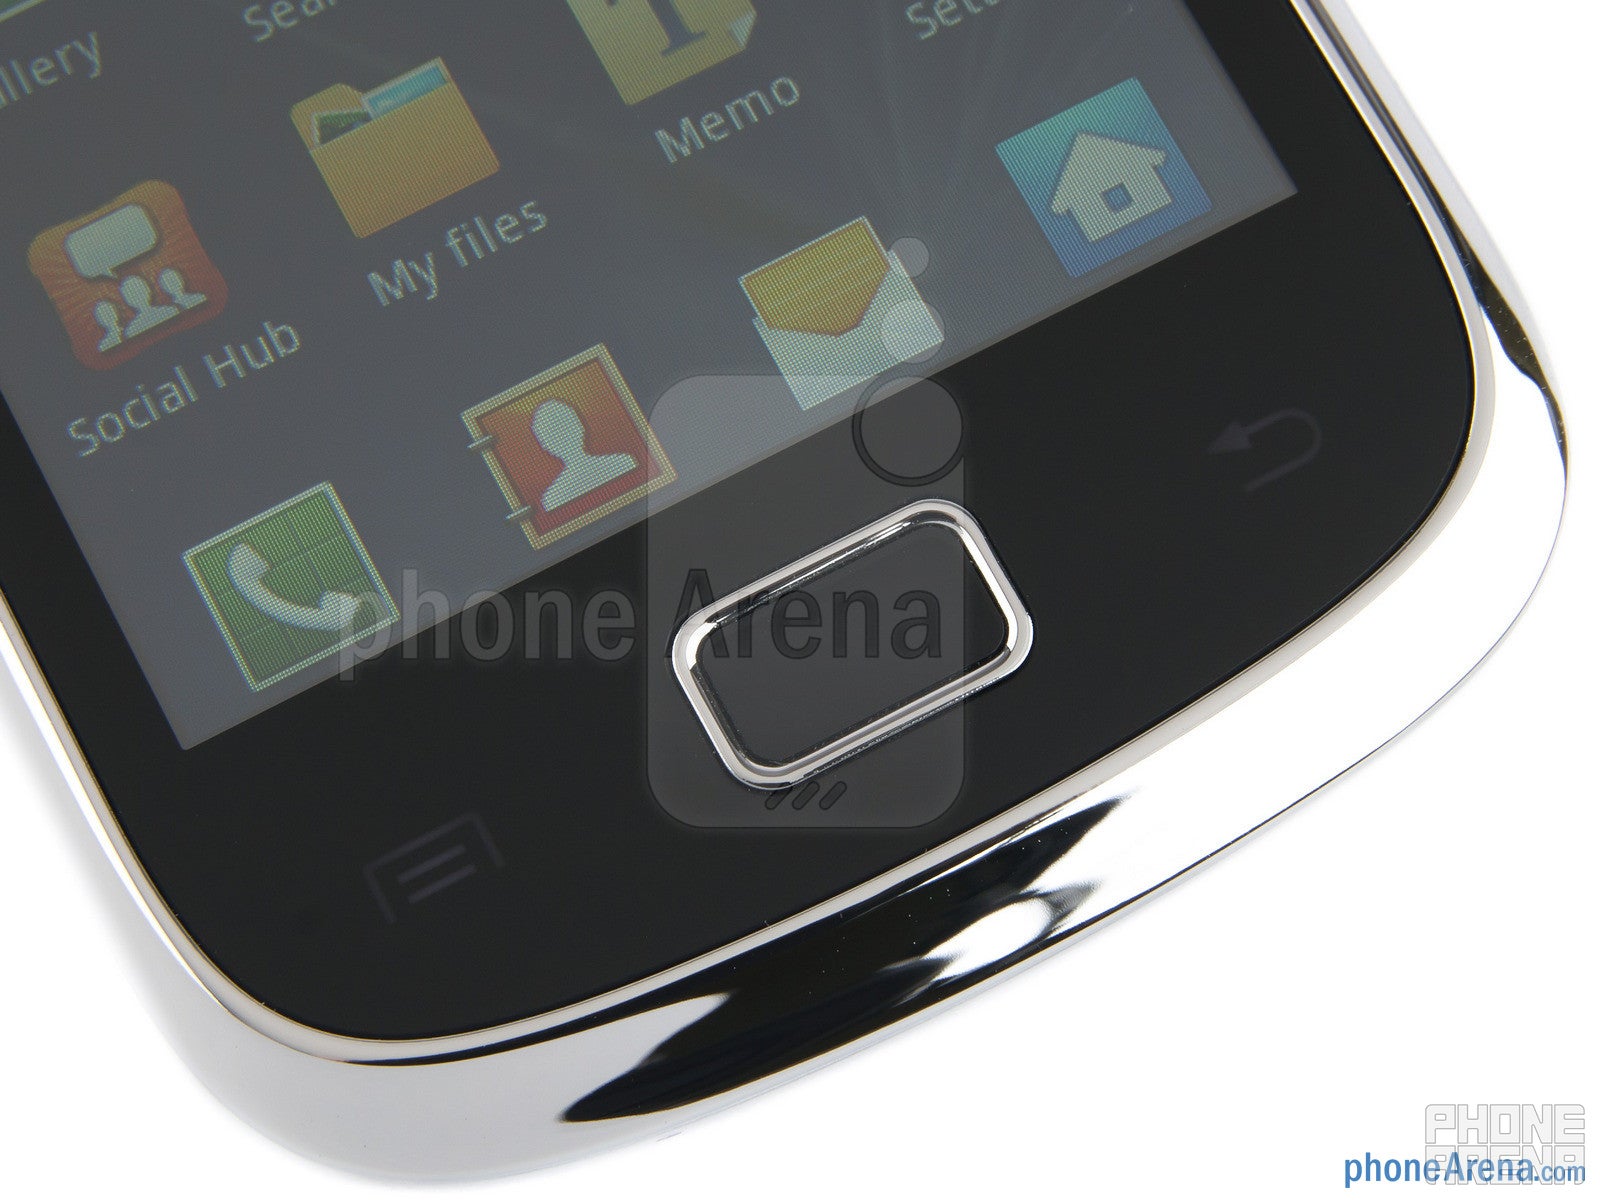 Samsung Galaxy mini 2 Review